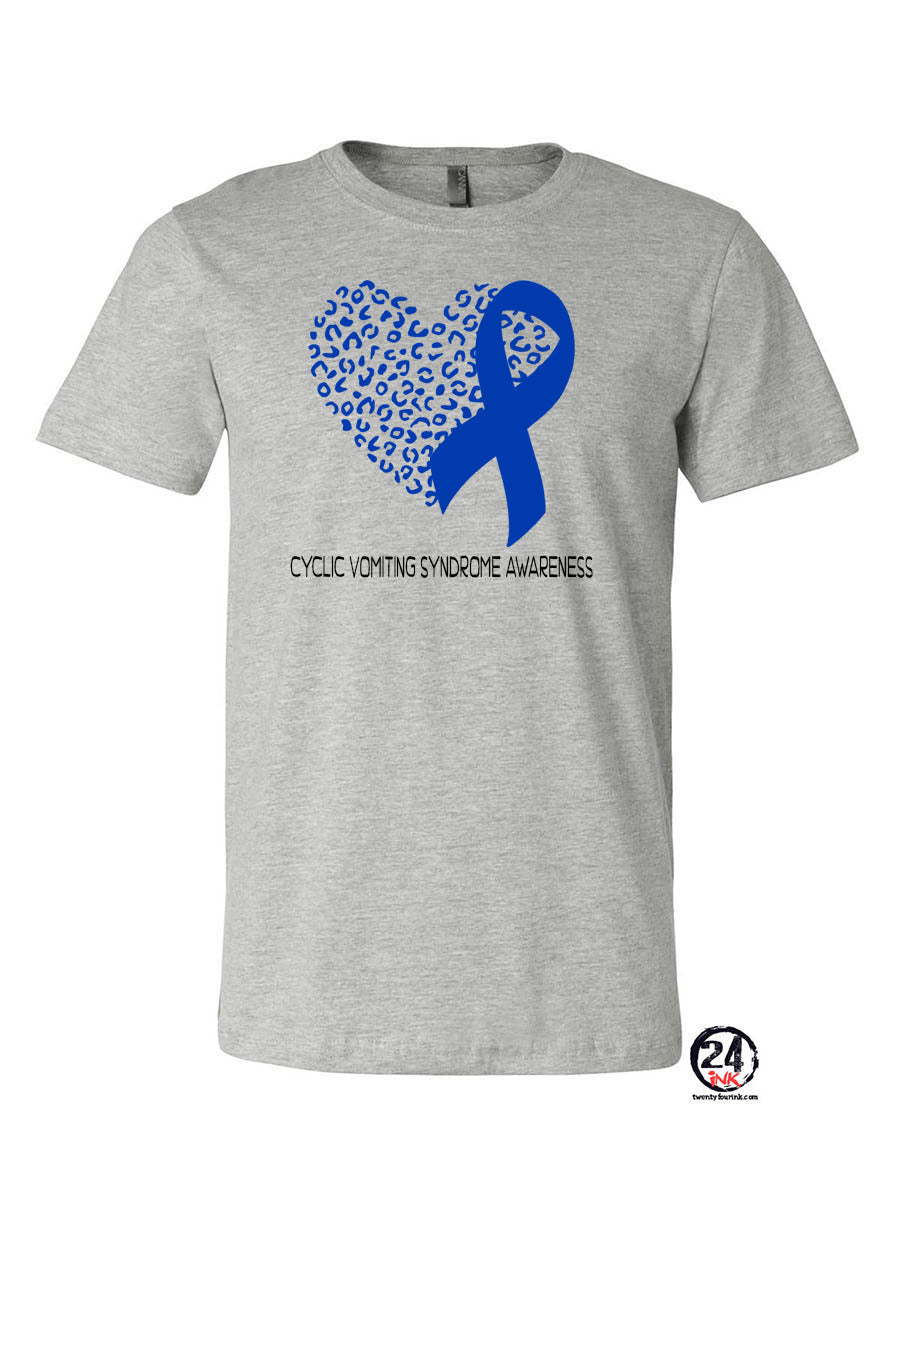 CVS Awareness T-Shirt, Cyclic vomiting Syndrome